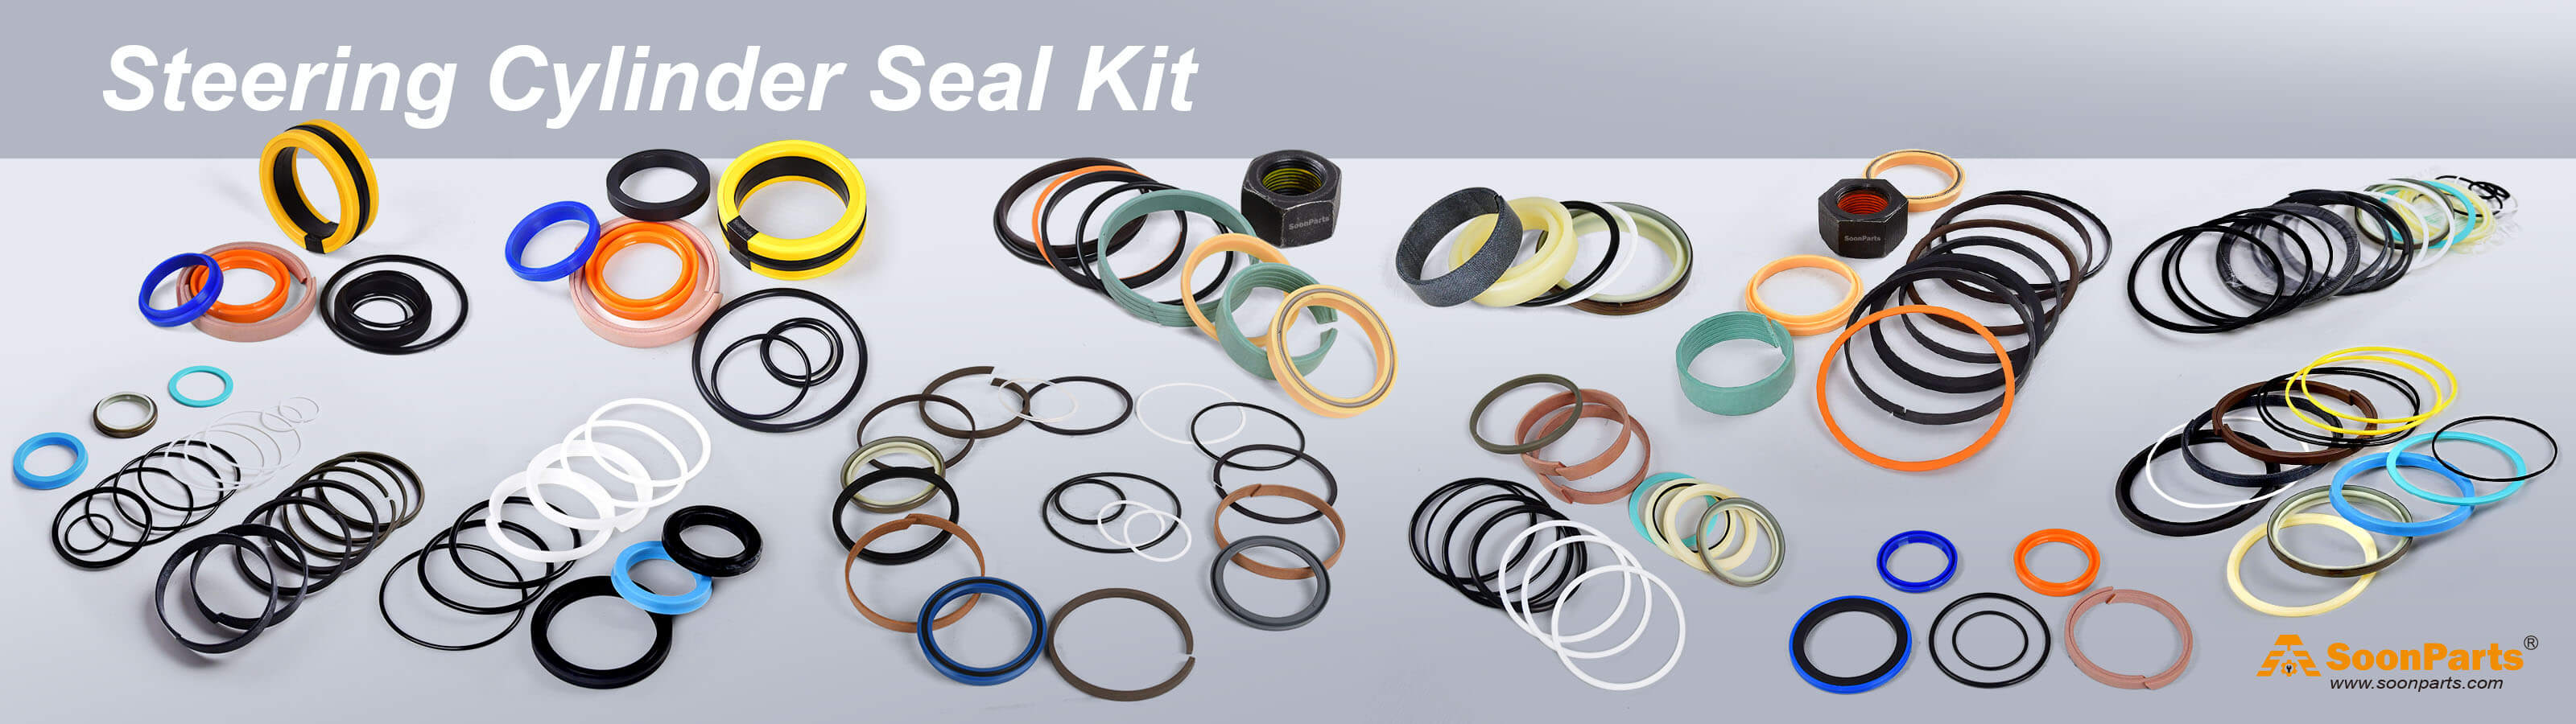 Steering Cylinder Seal Kit